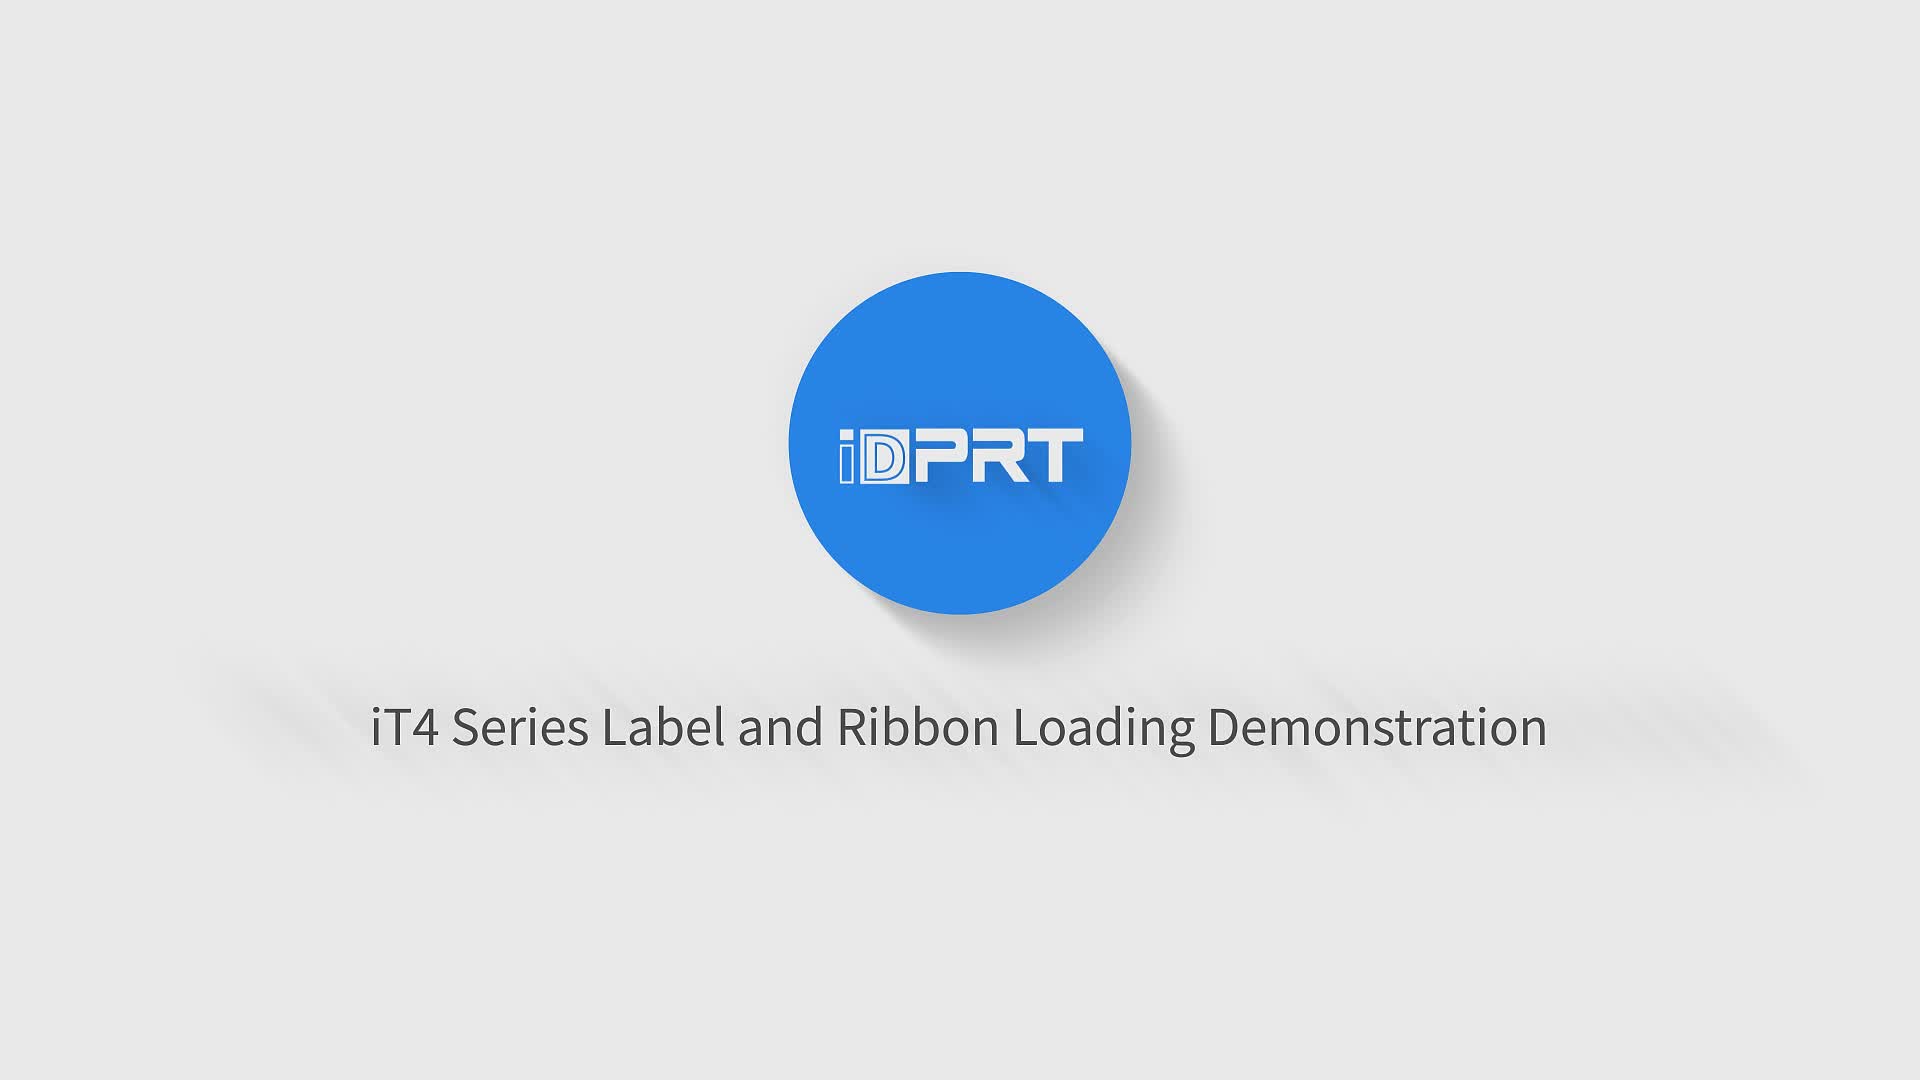 iT4 Series Barcode Printer Label and Ribbon Loading